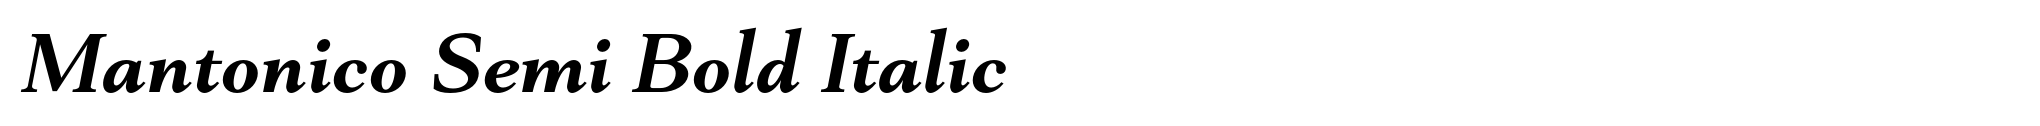 Mantonico Semi Bold Italic image